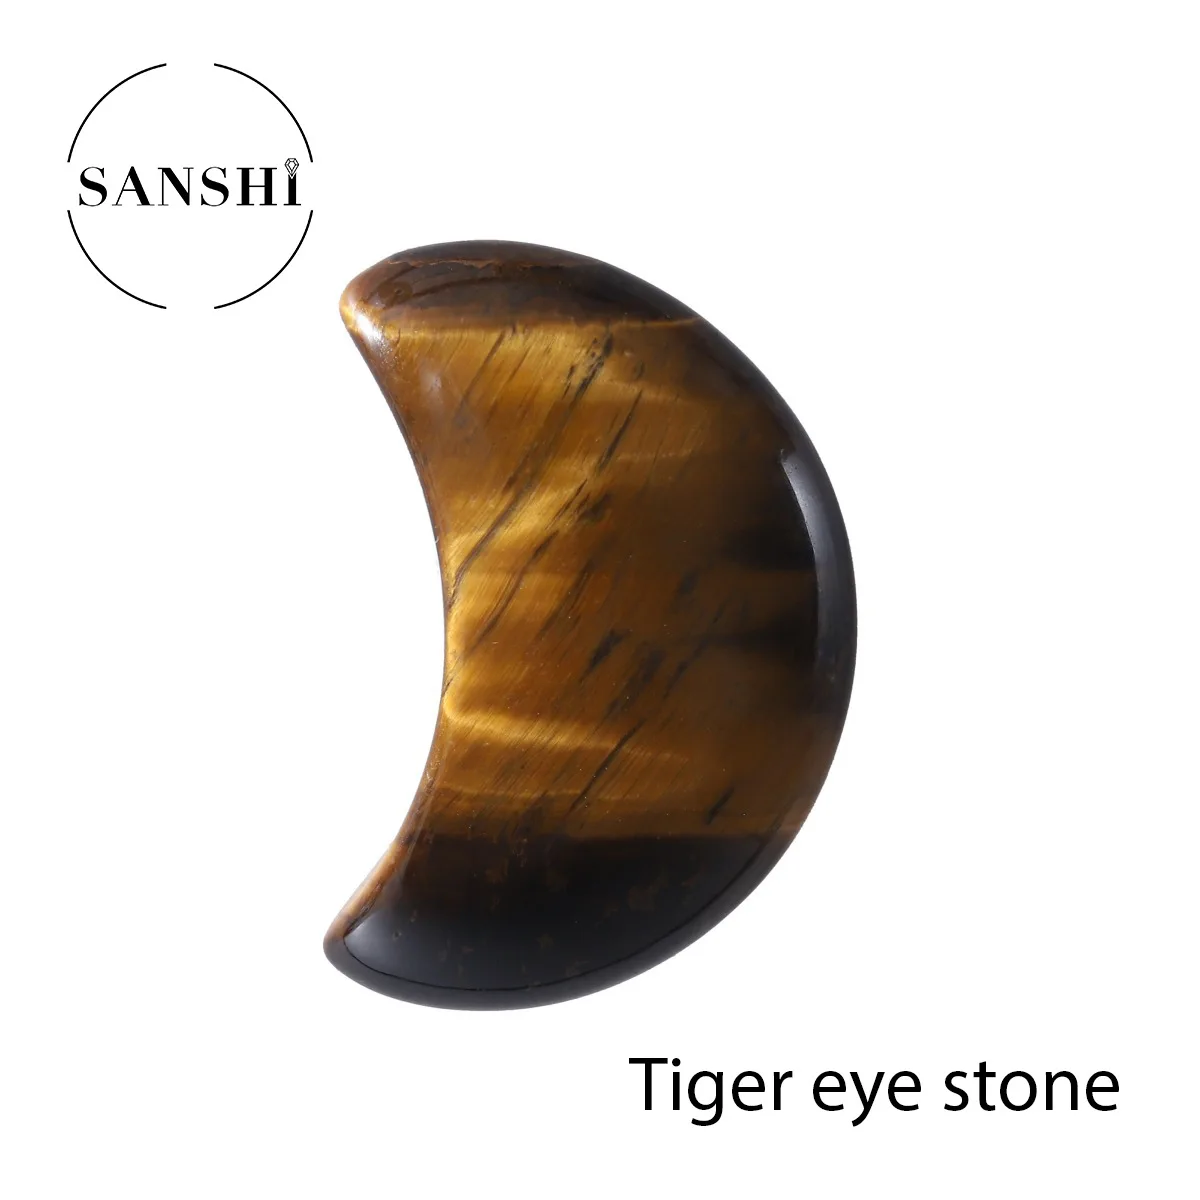 Tiger eye stone 1.jpg